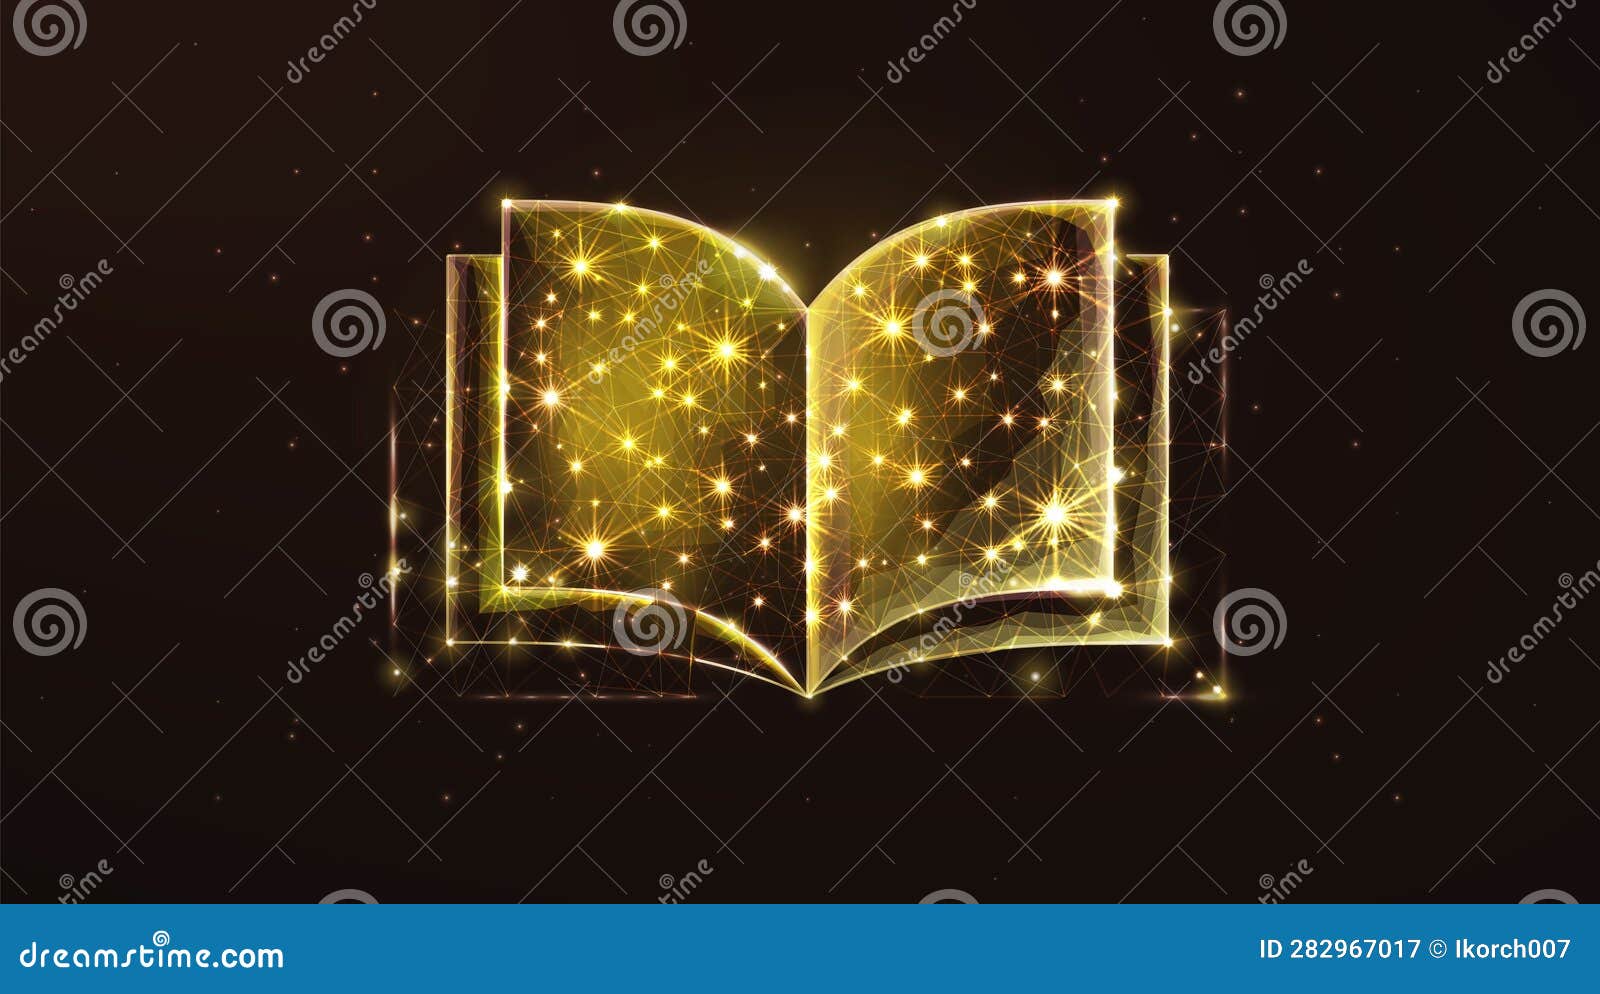 legend book symbol